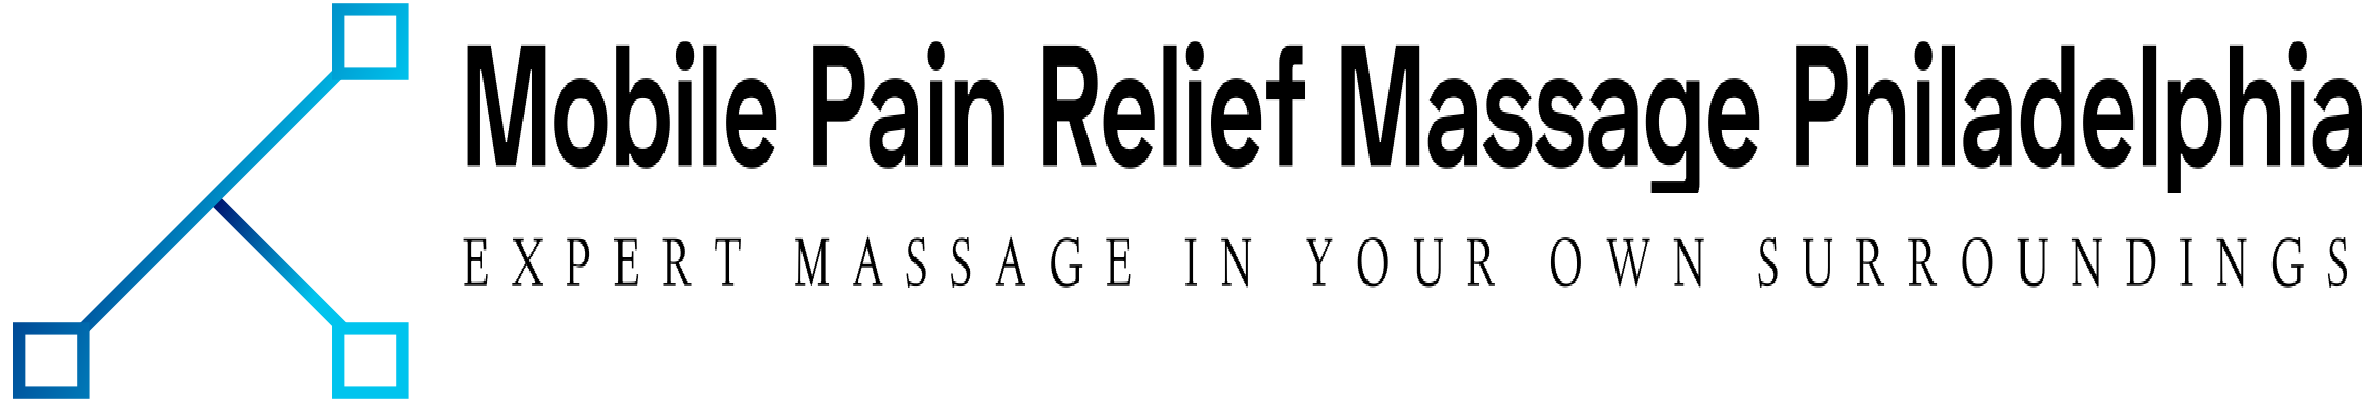 Mobile Pain Relief Massage Philadelphia Logo